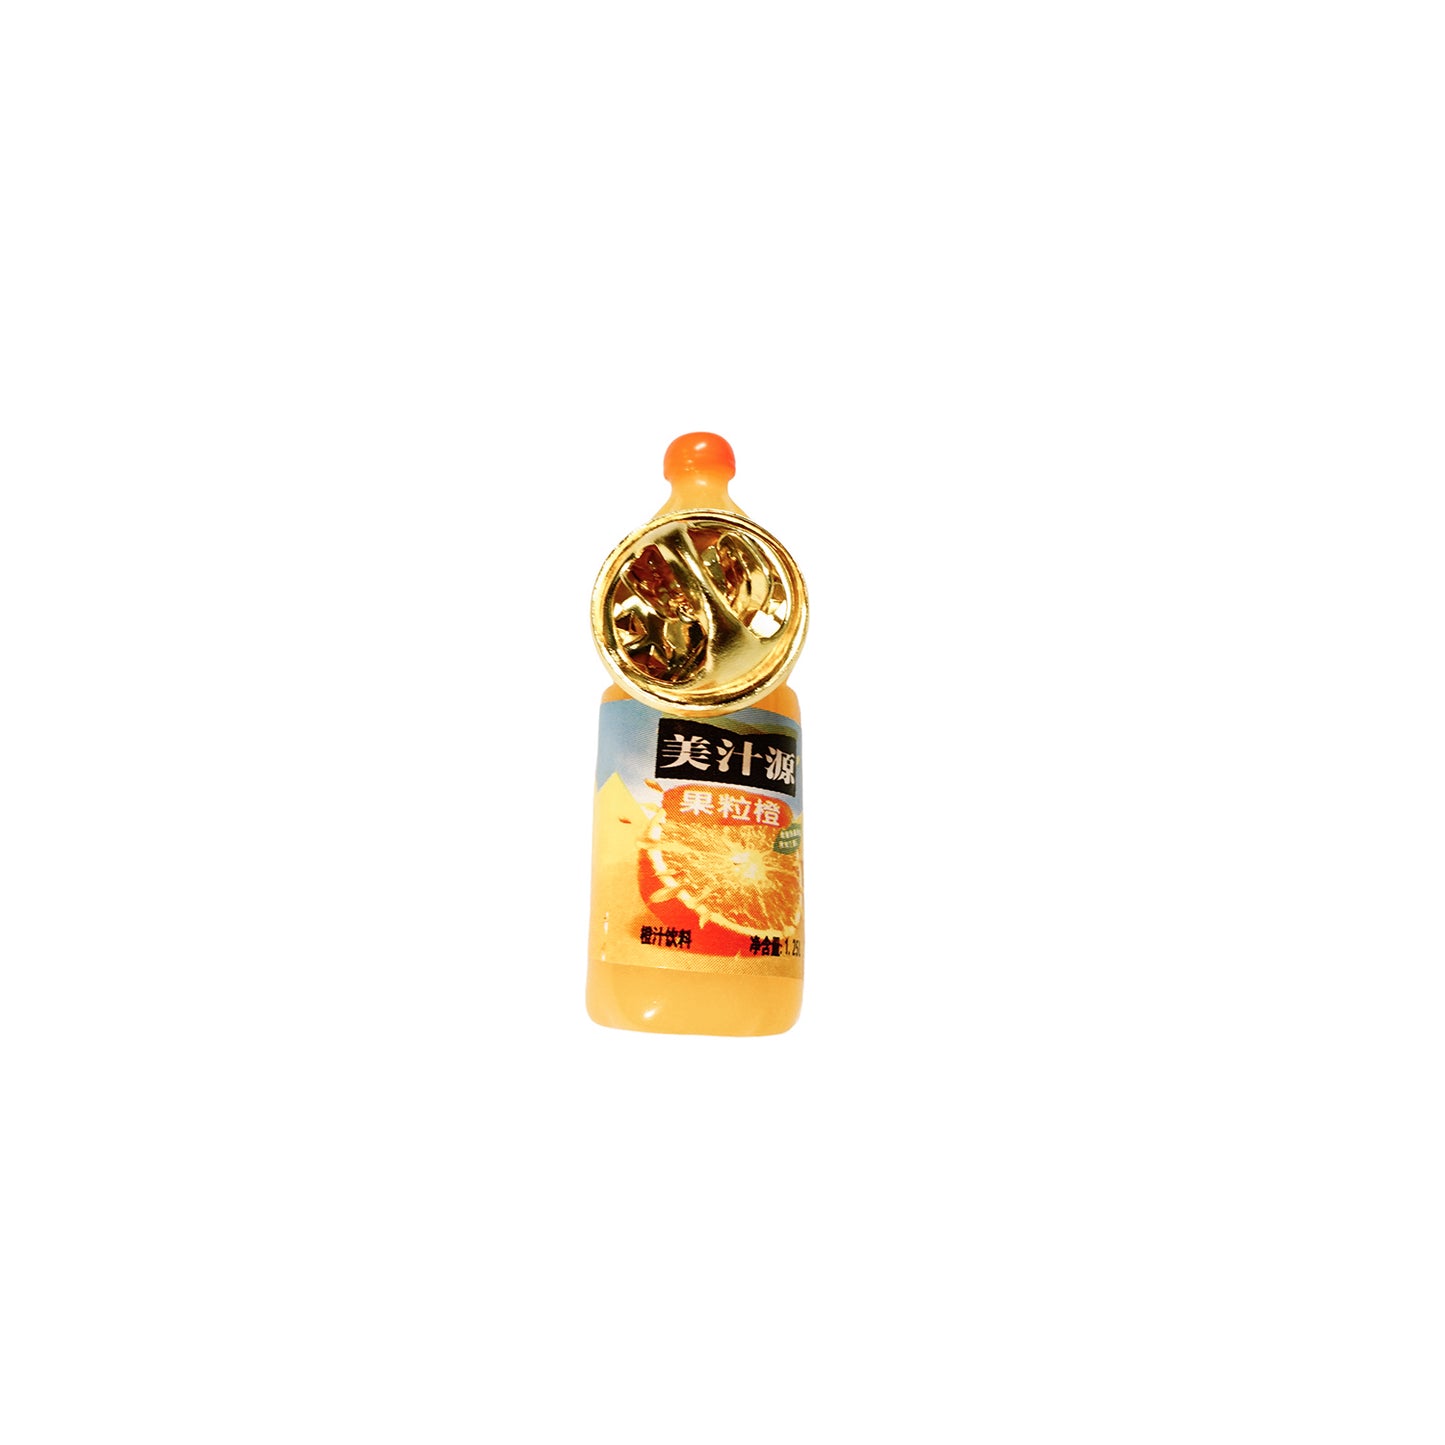 Miniature Beverage Pin